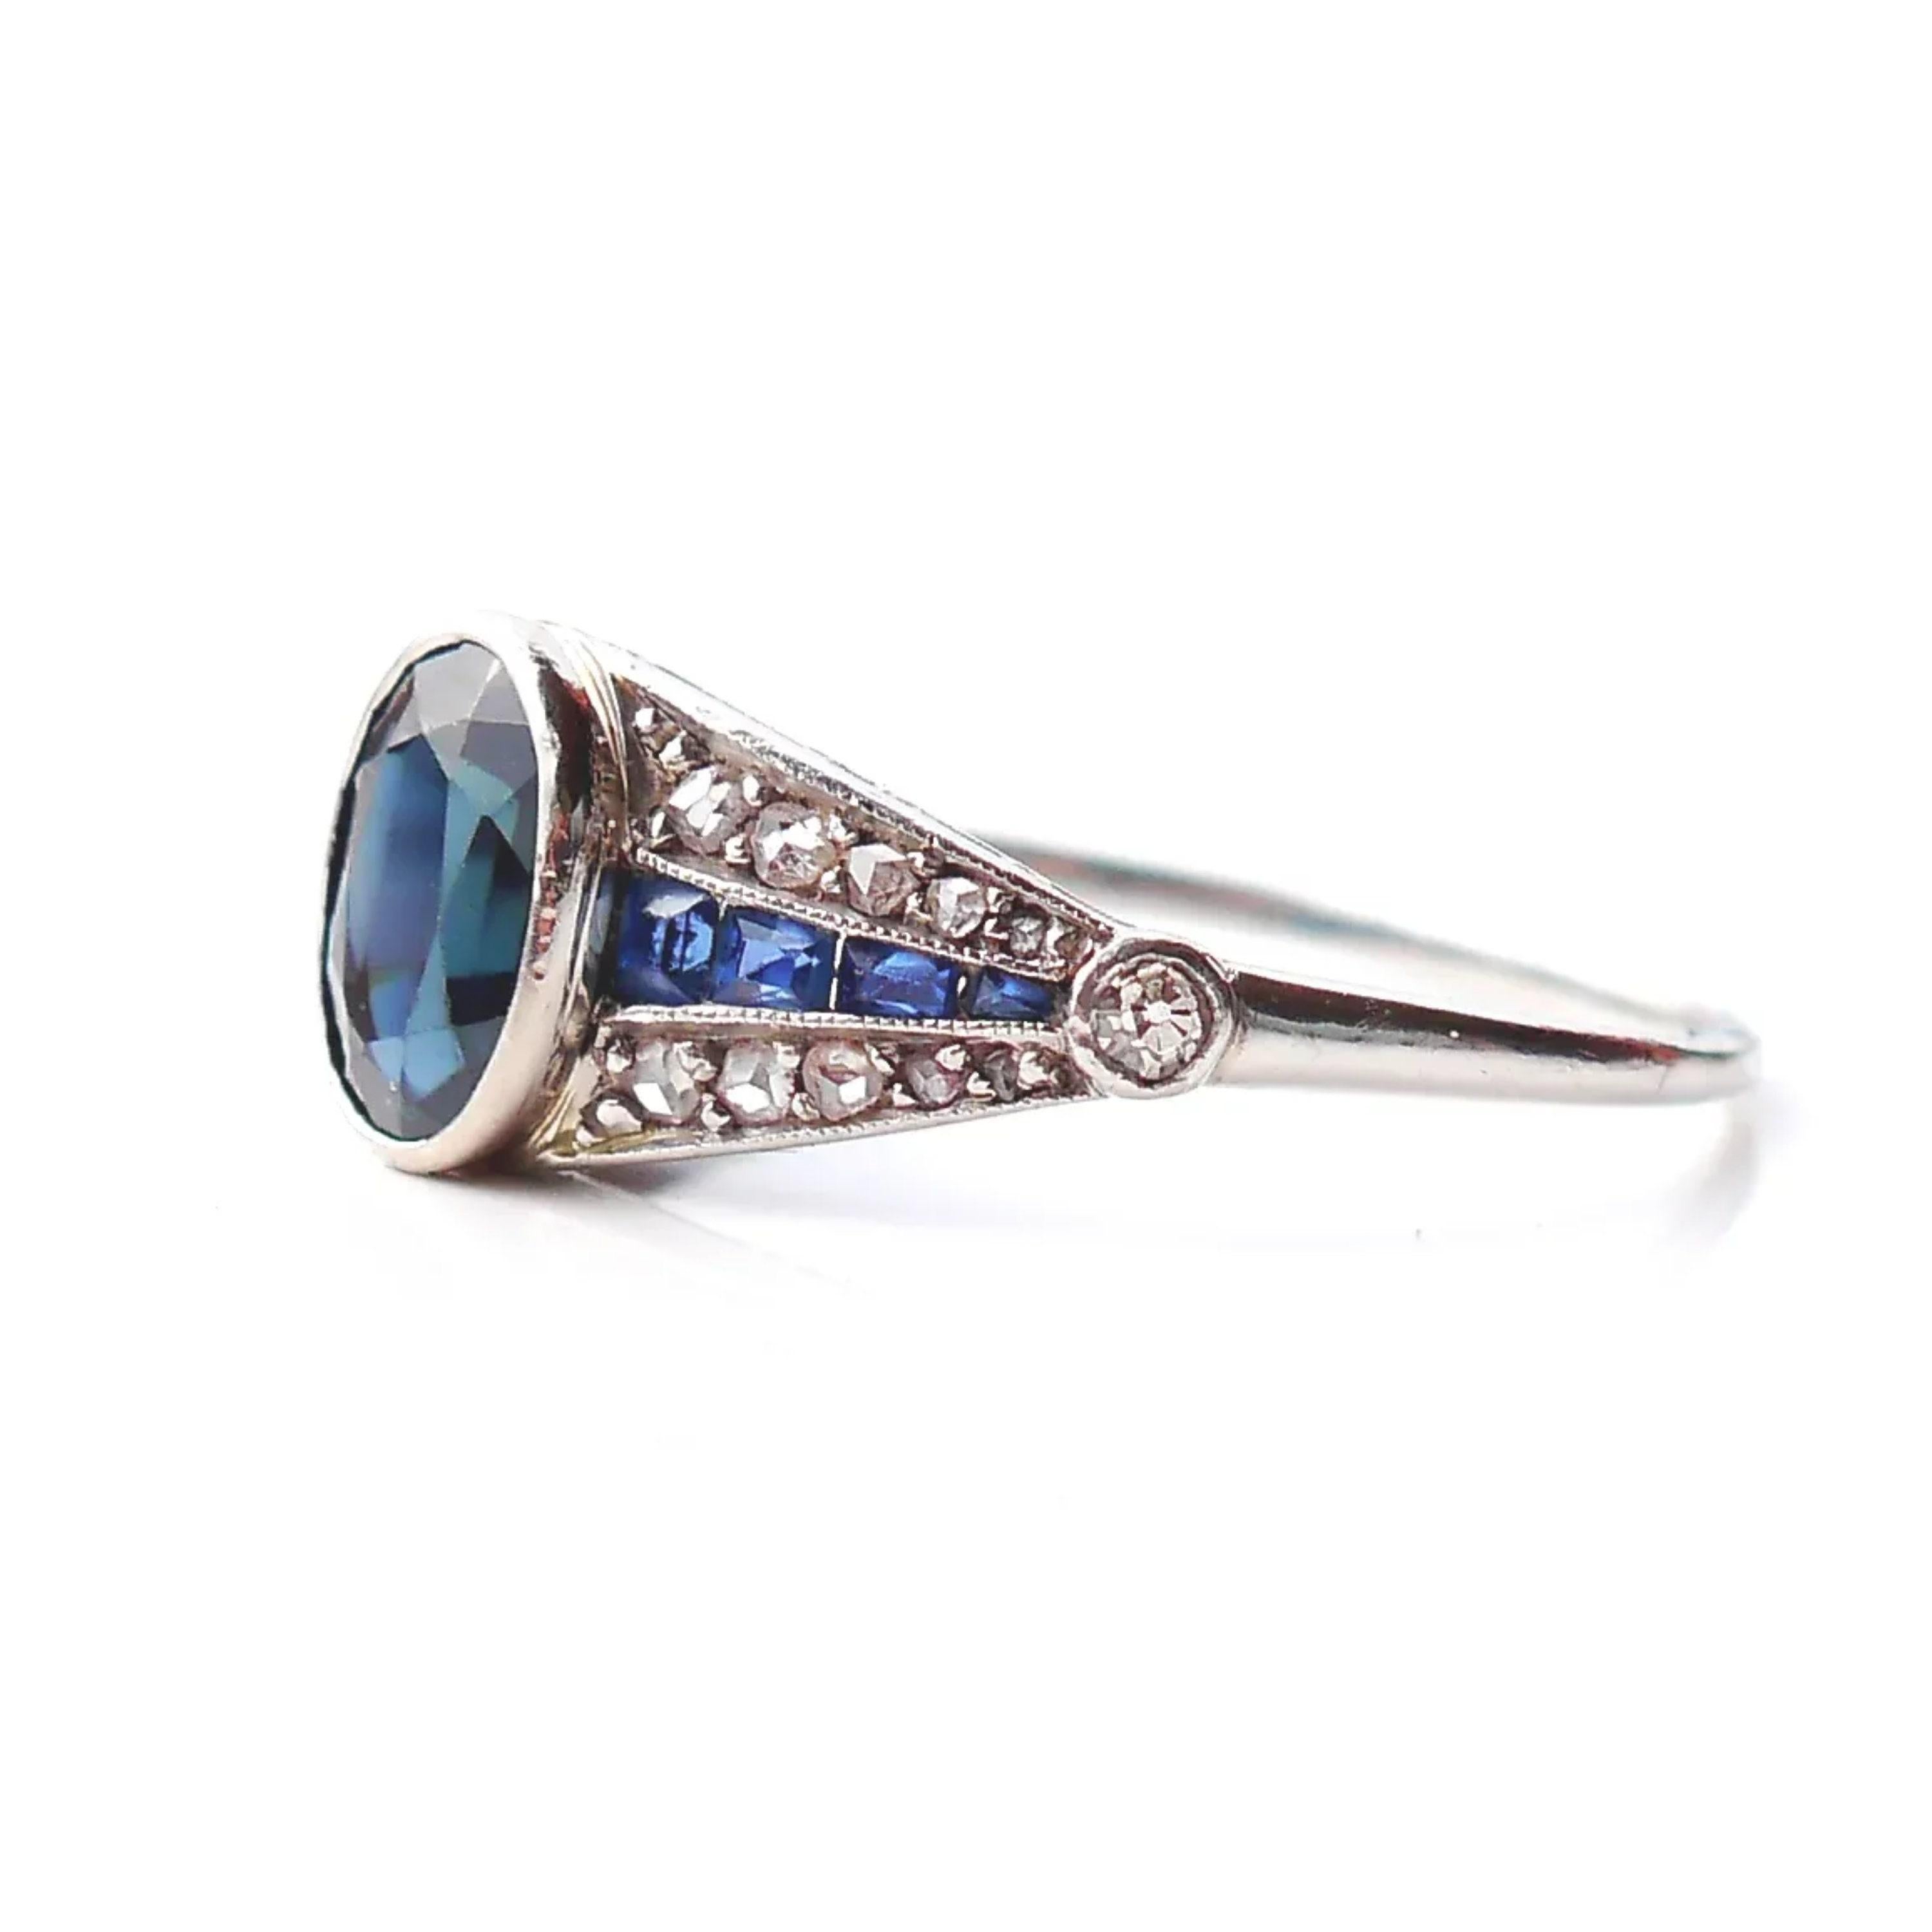 For Sale:  3 Carat Oval Cut Sapphire Engagement Ring Unique Diamond Half Eternity Band 5